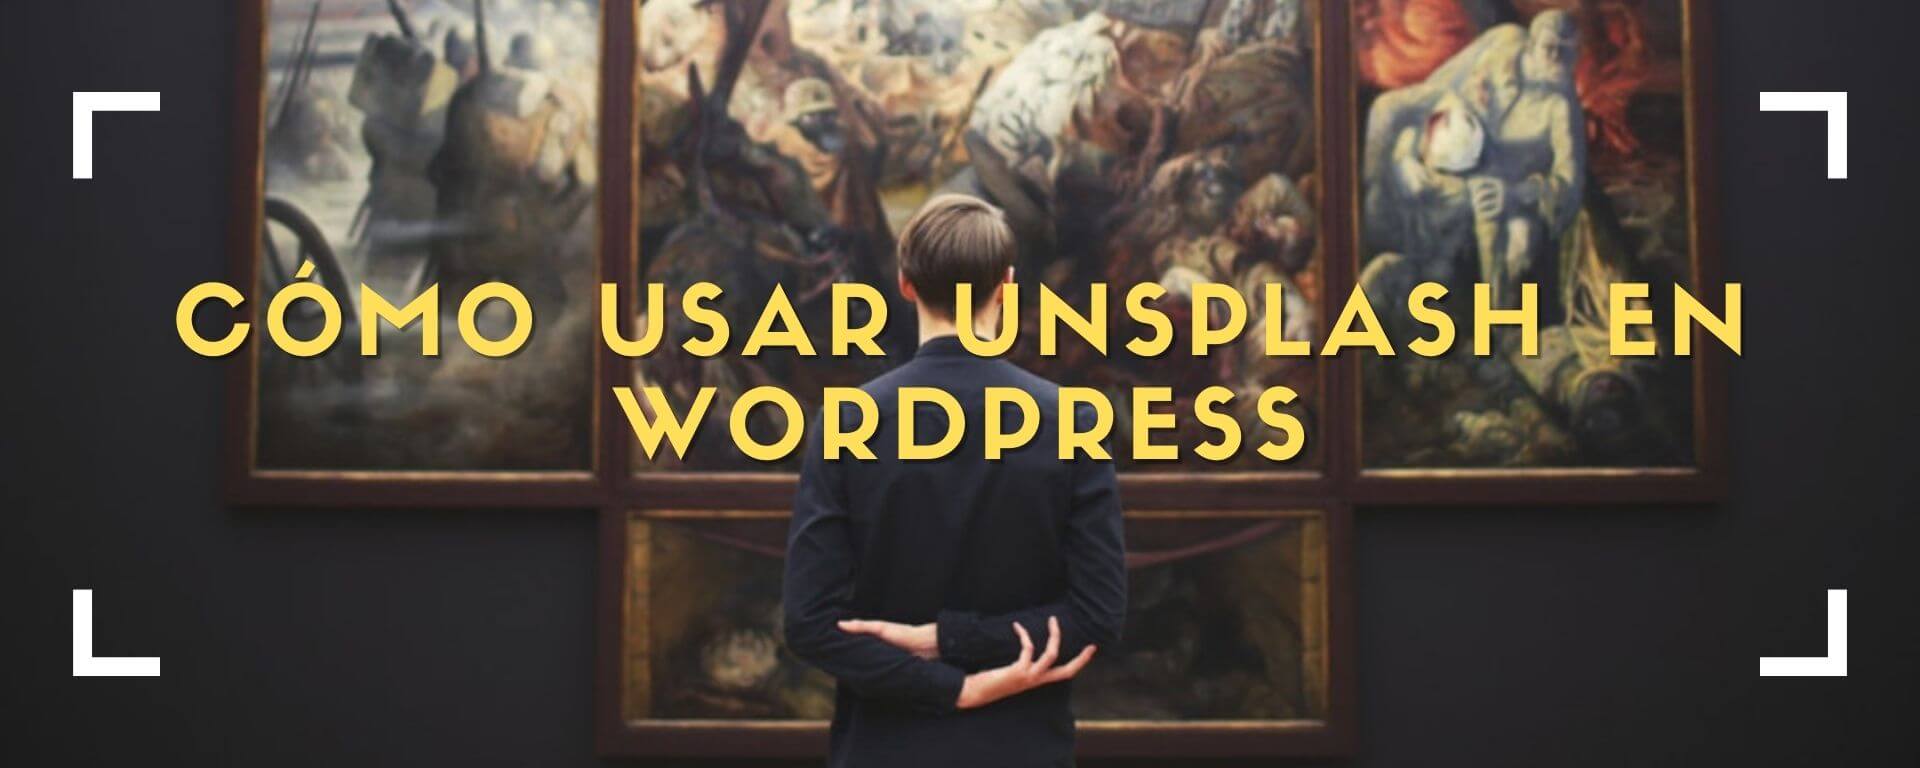 Unsplash Wordpress